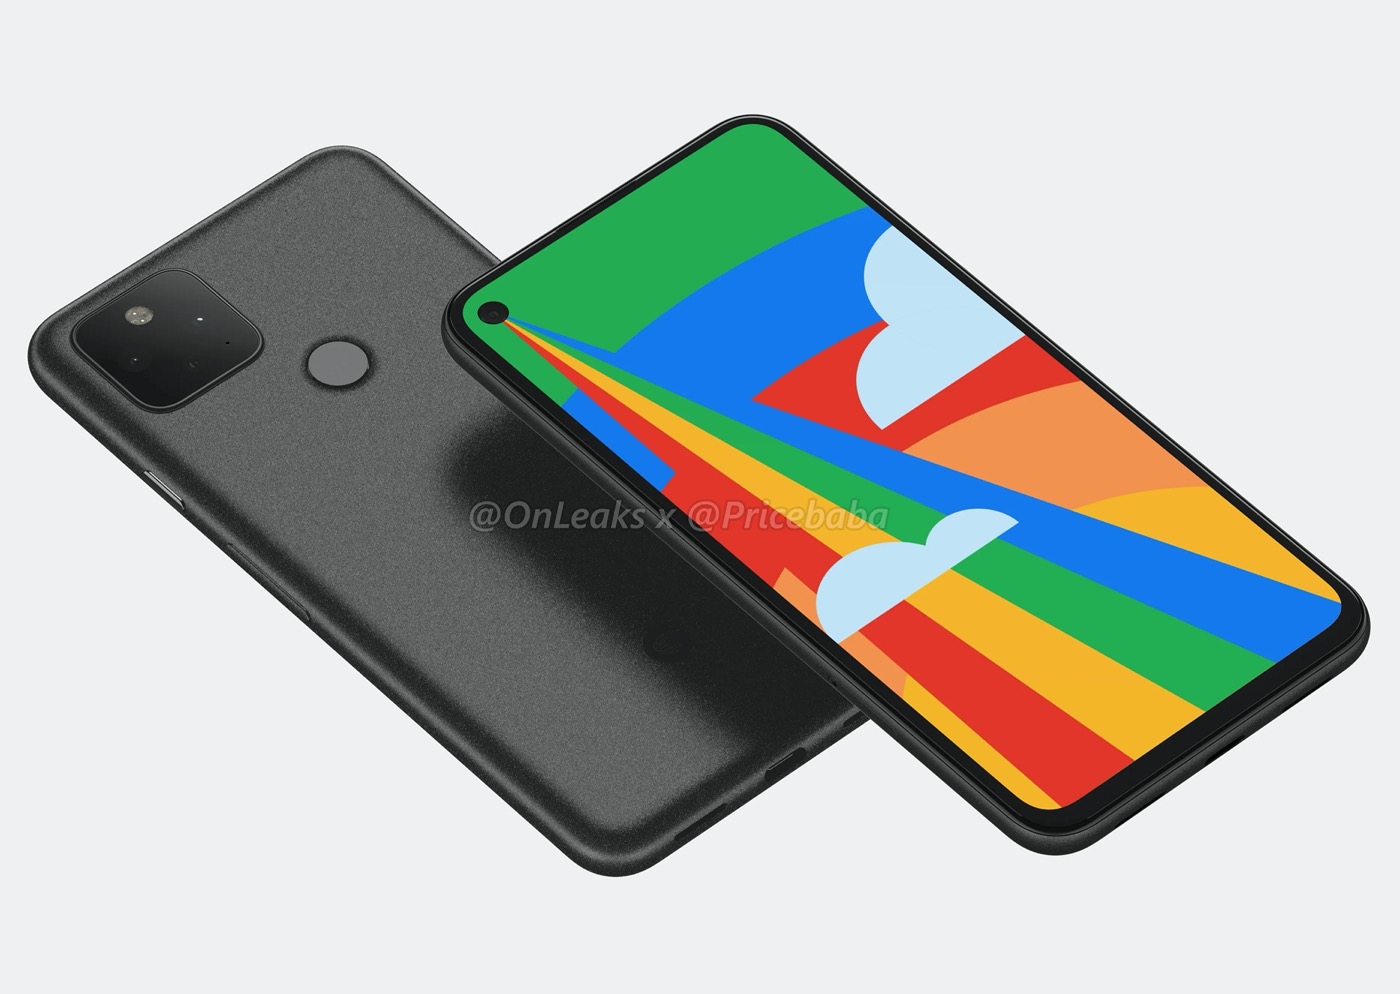 ｢Google Pixel 5｣のレンダリング画像 − 本体デザインや寸法などの情報が明らかに